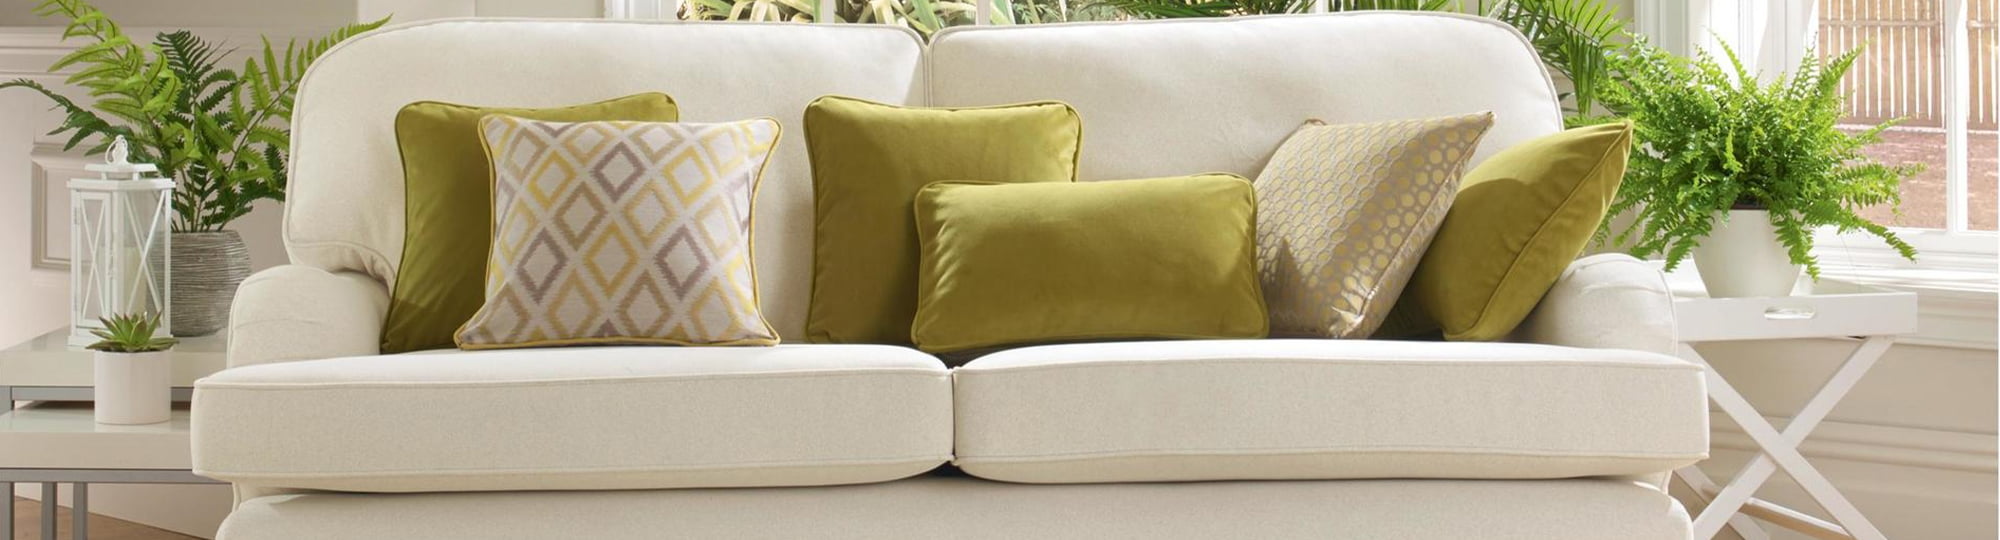 Aquaclean replacement sofa covers